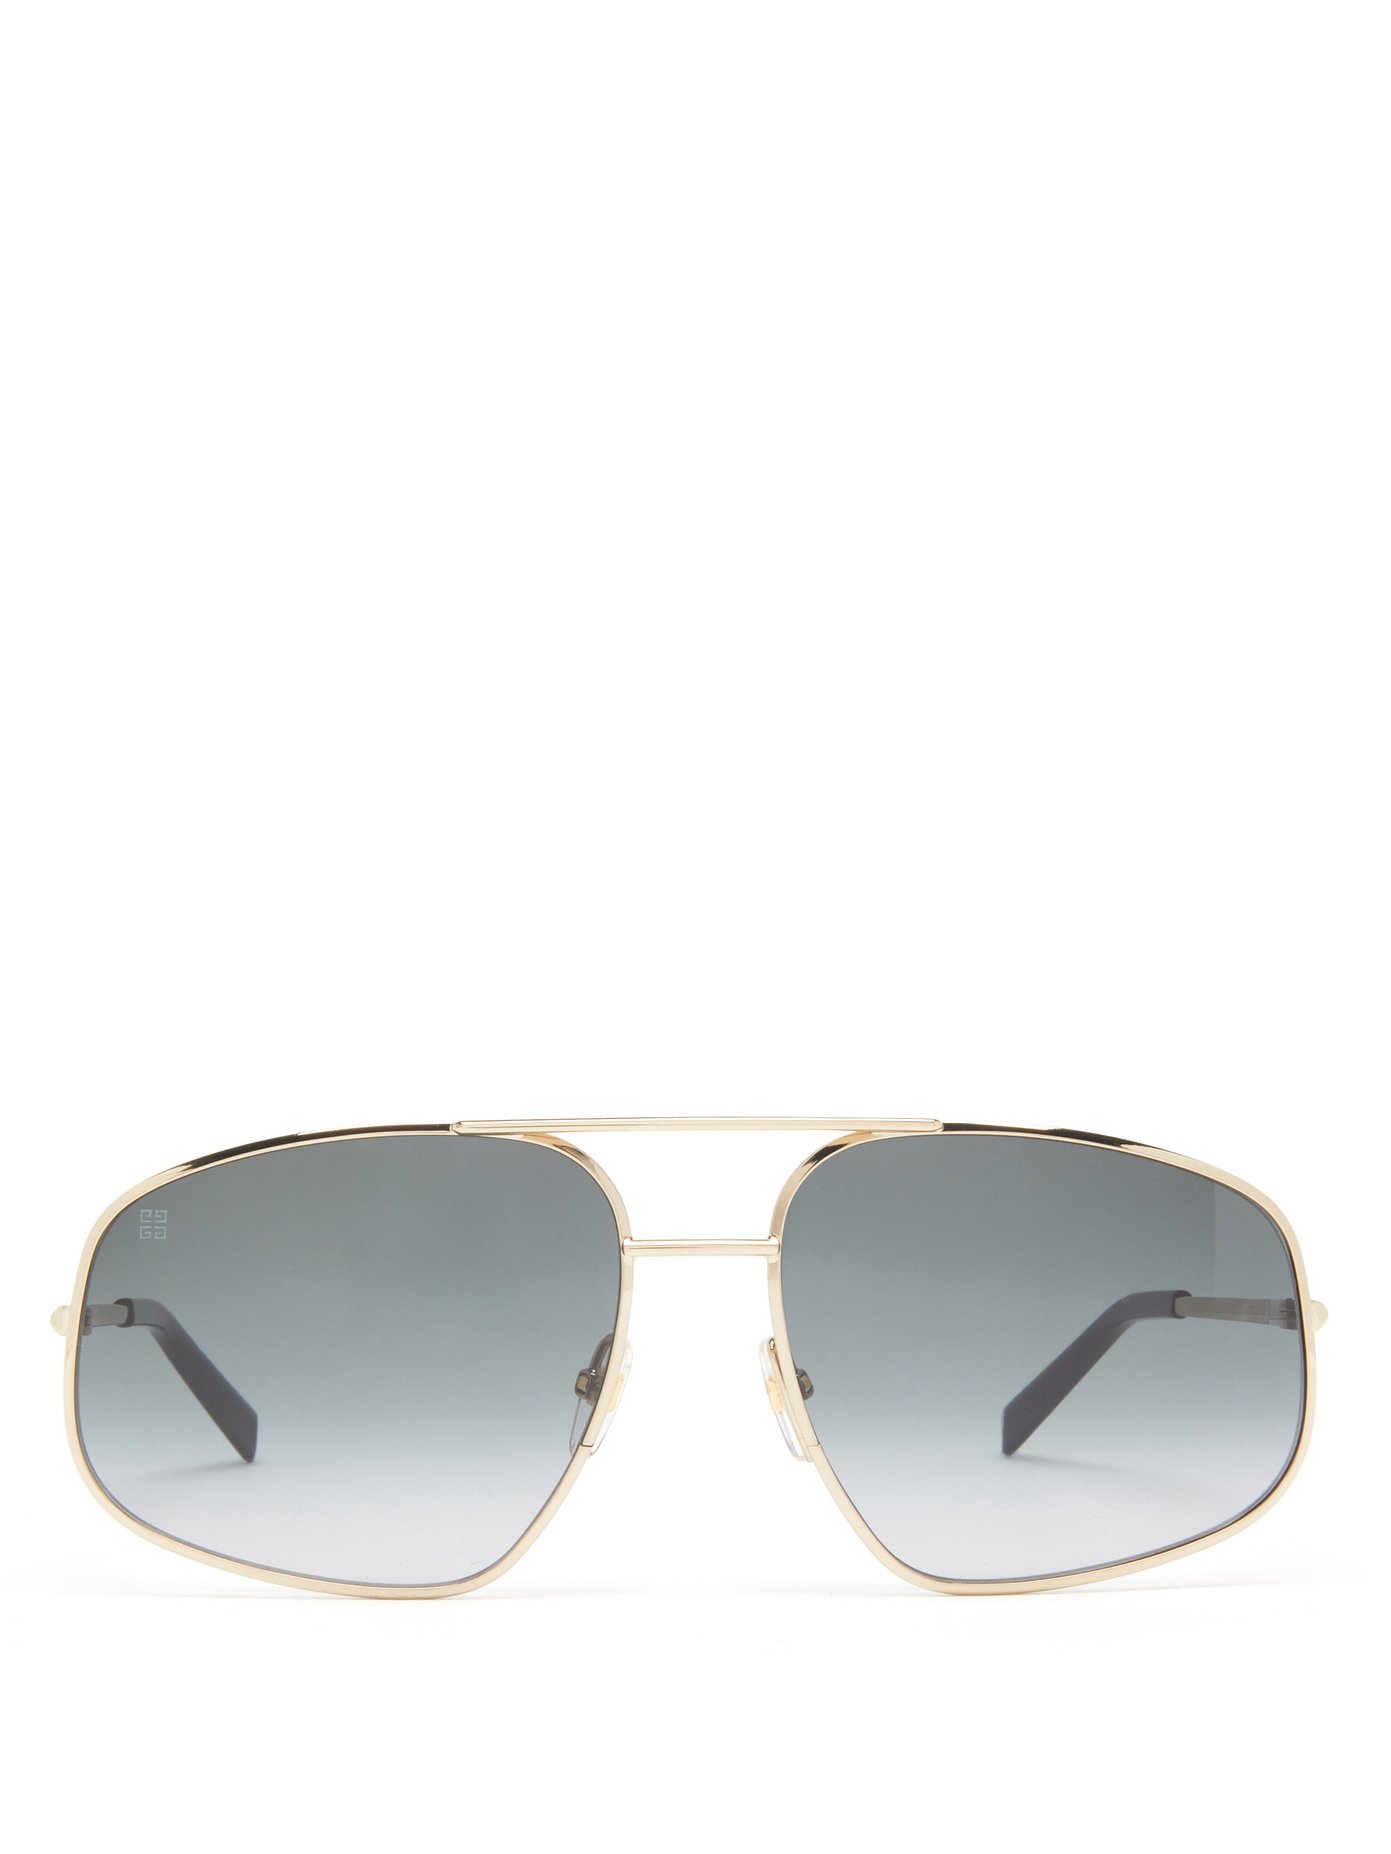 Aviator metal sunglasses | Givenchy 